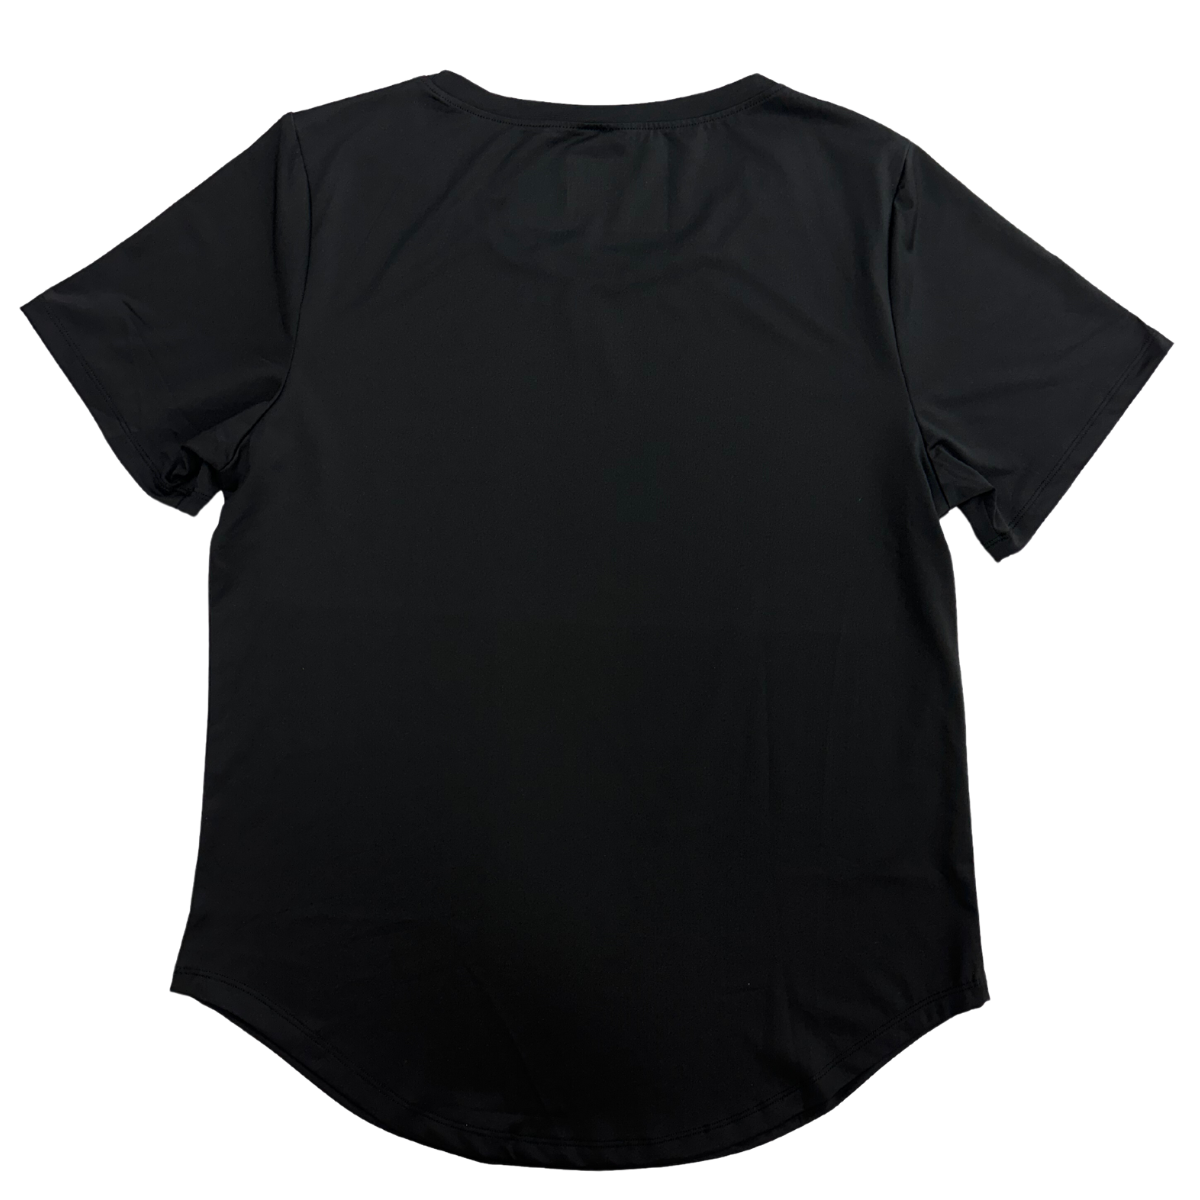 Women's Athletic Short Sleeve T-Shirt